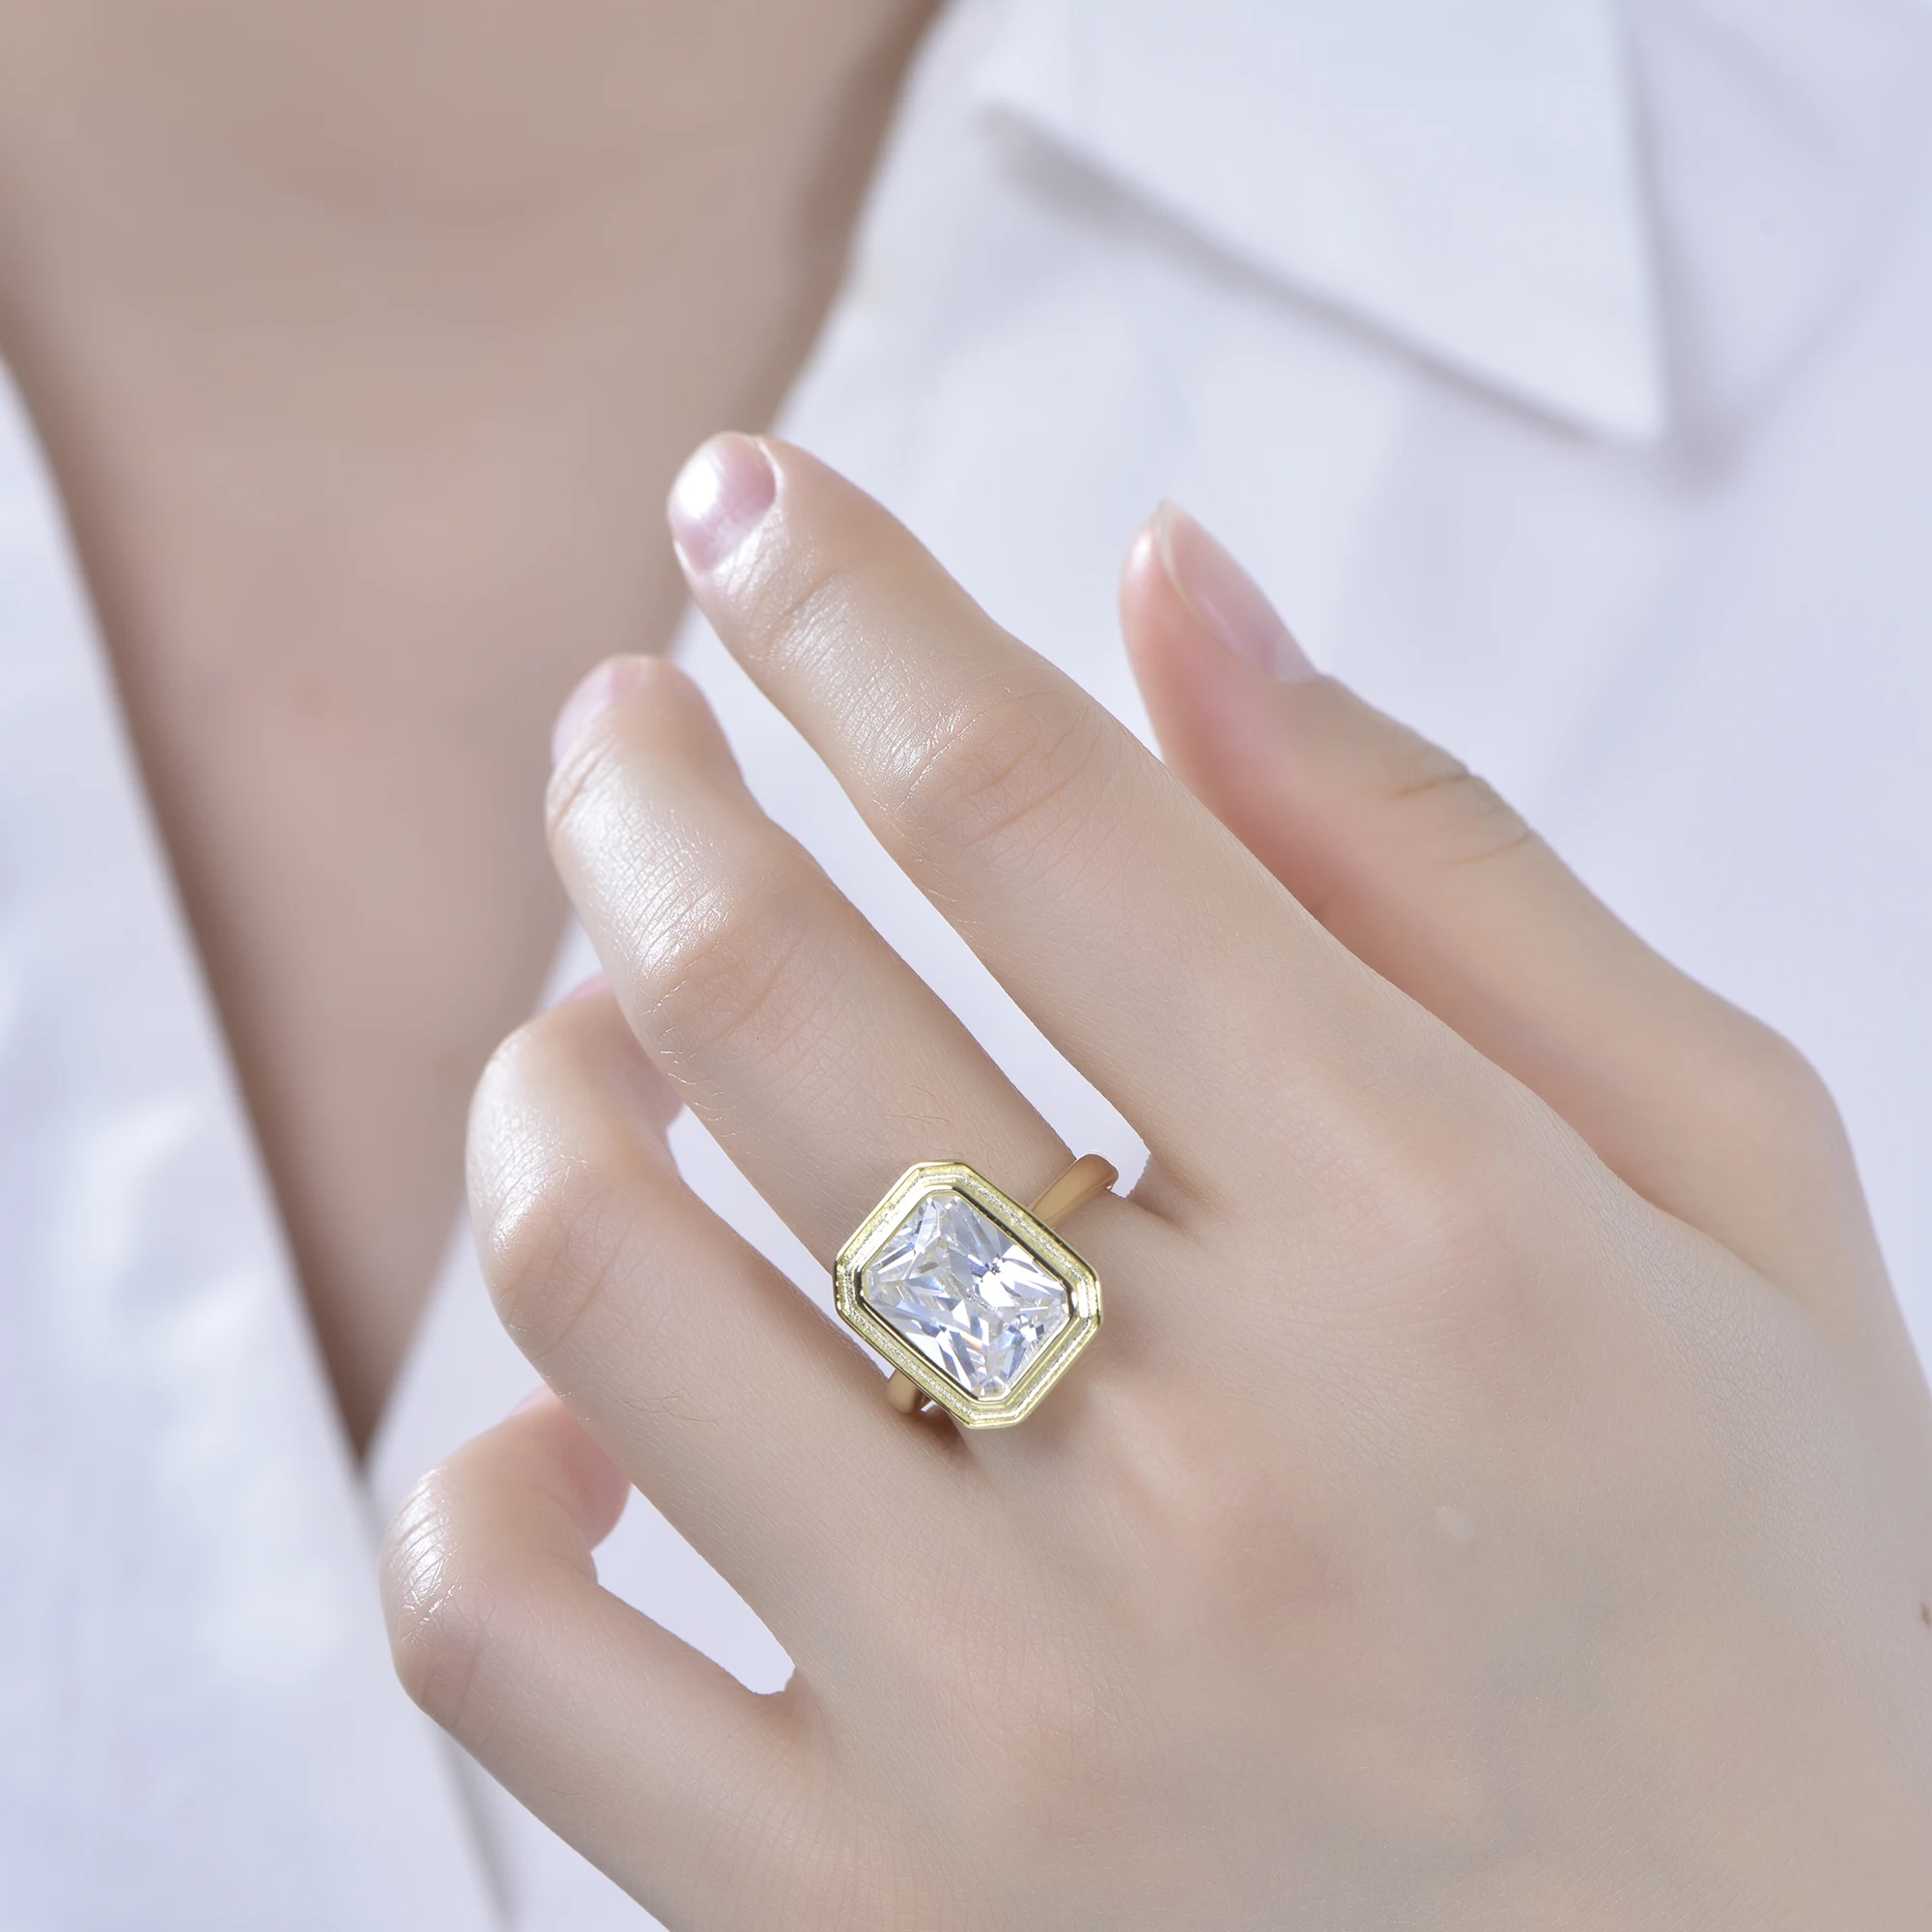 2021 custom men wedding rings jewelry14K gold plated rings for women 925 sterling silver engagement gold diamond wedding rings